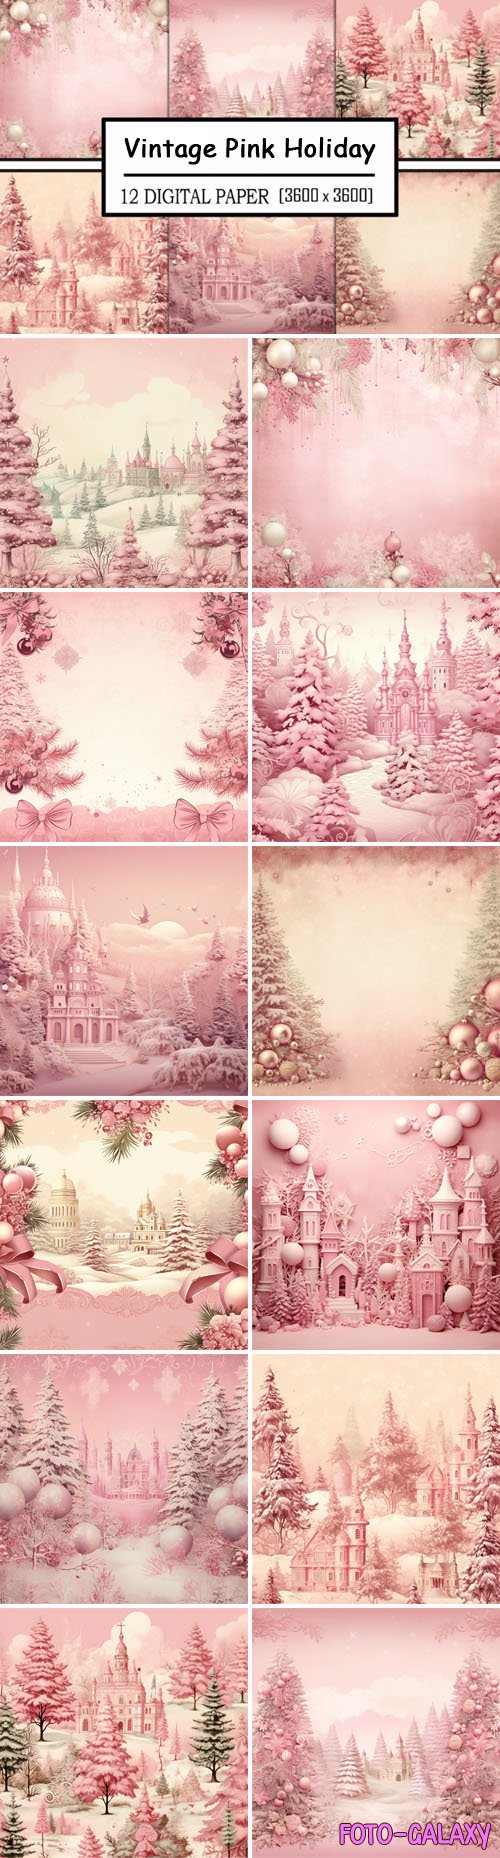 12 Vintage Pink Holiday Backgrounds Pack